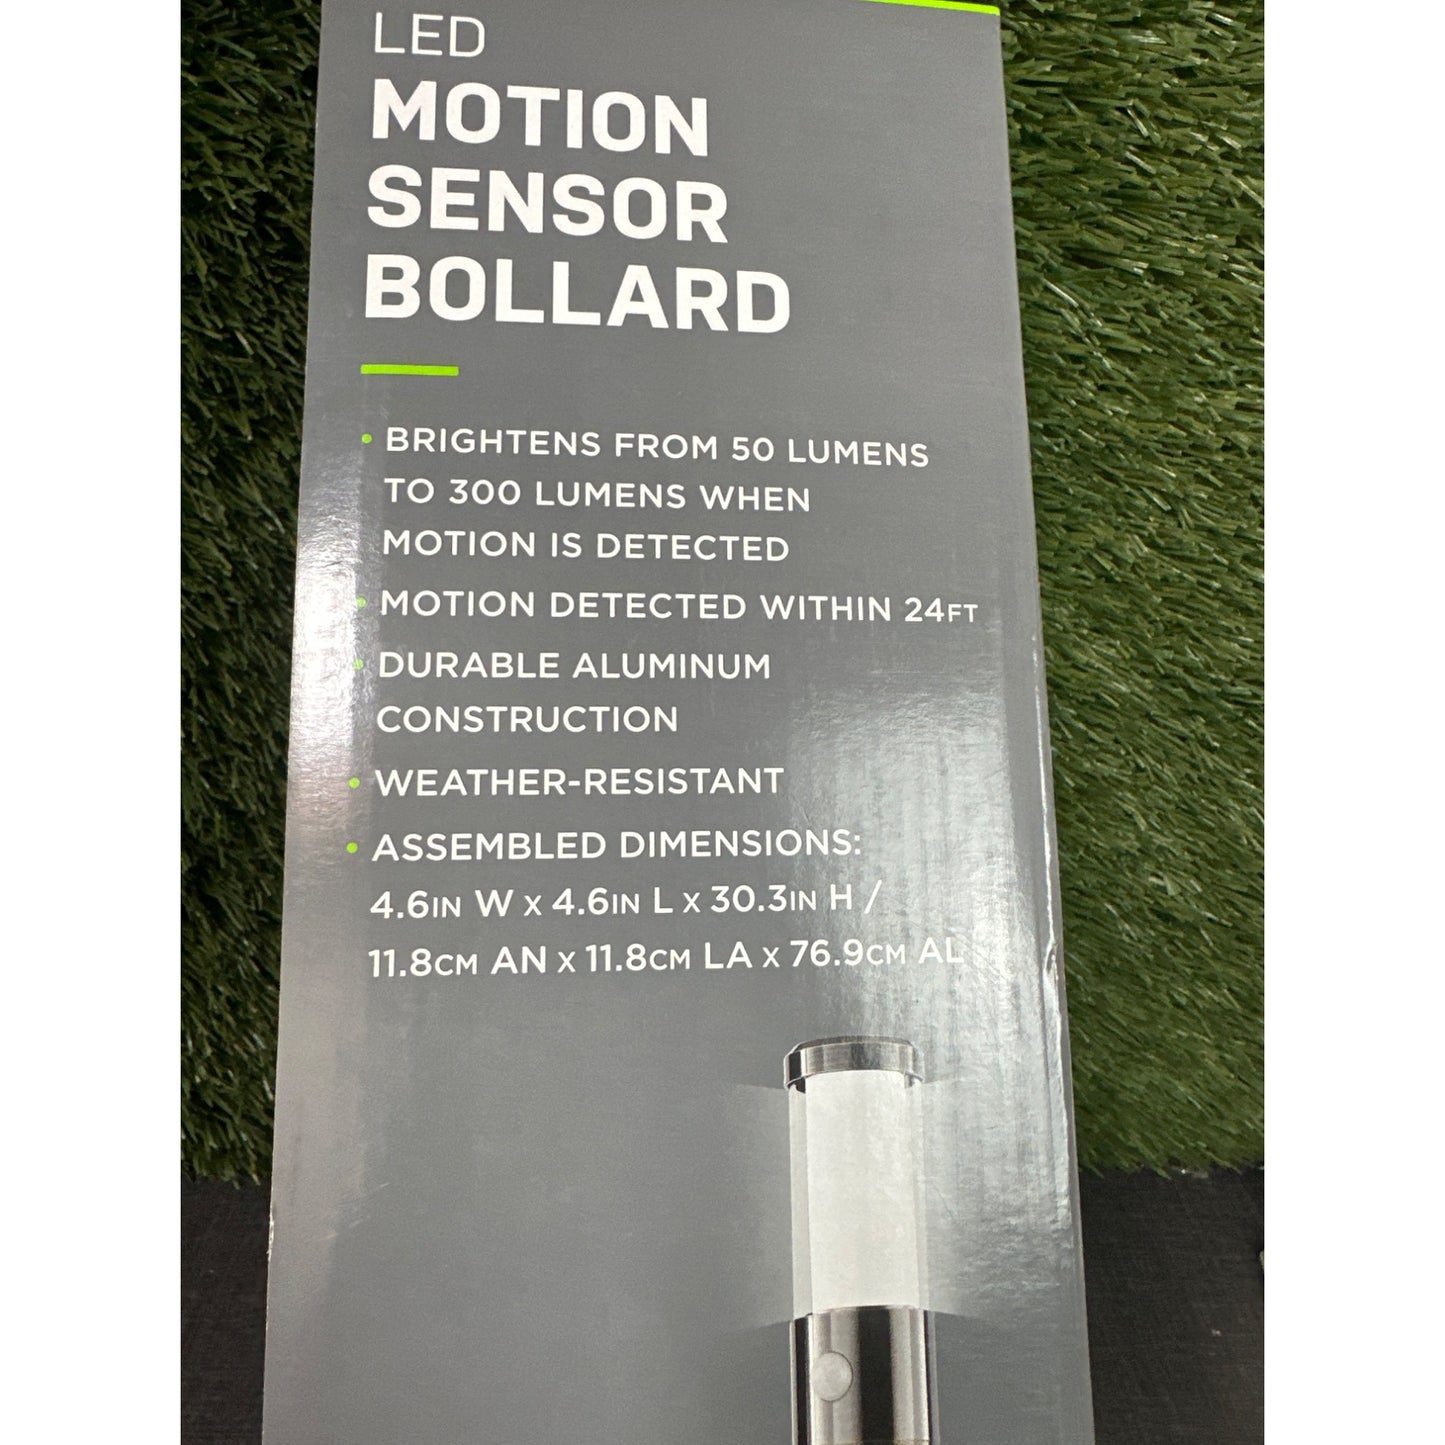 Led motion sensor bollard